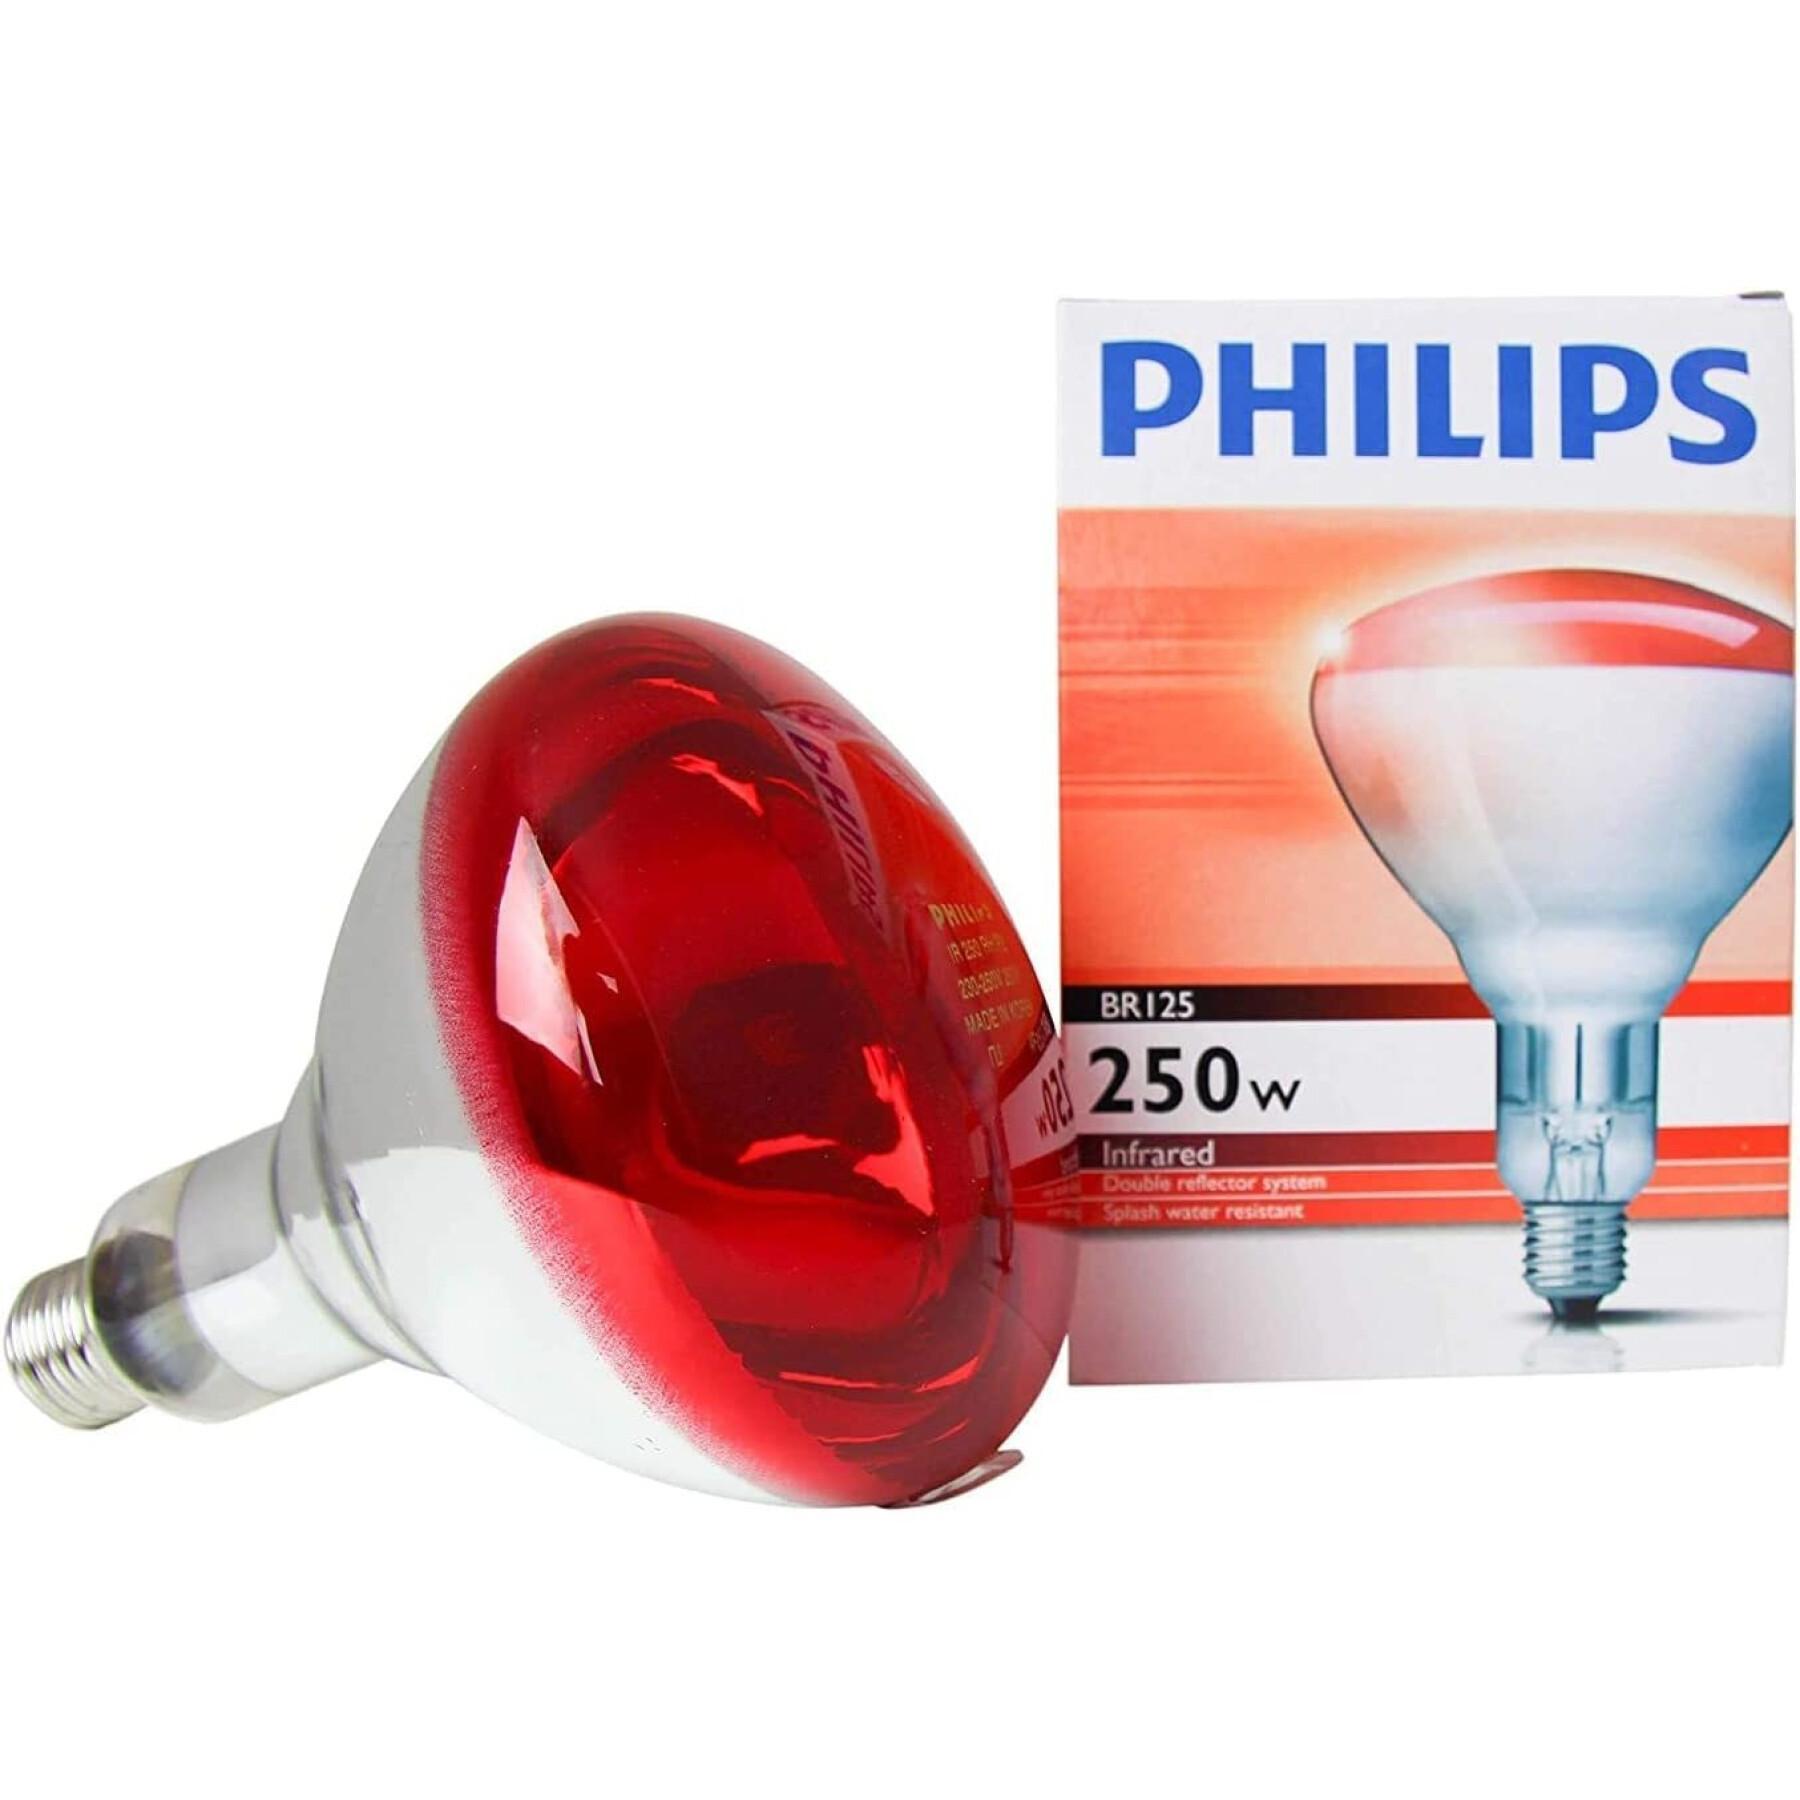 Infraroodlamp Kerbl Philips